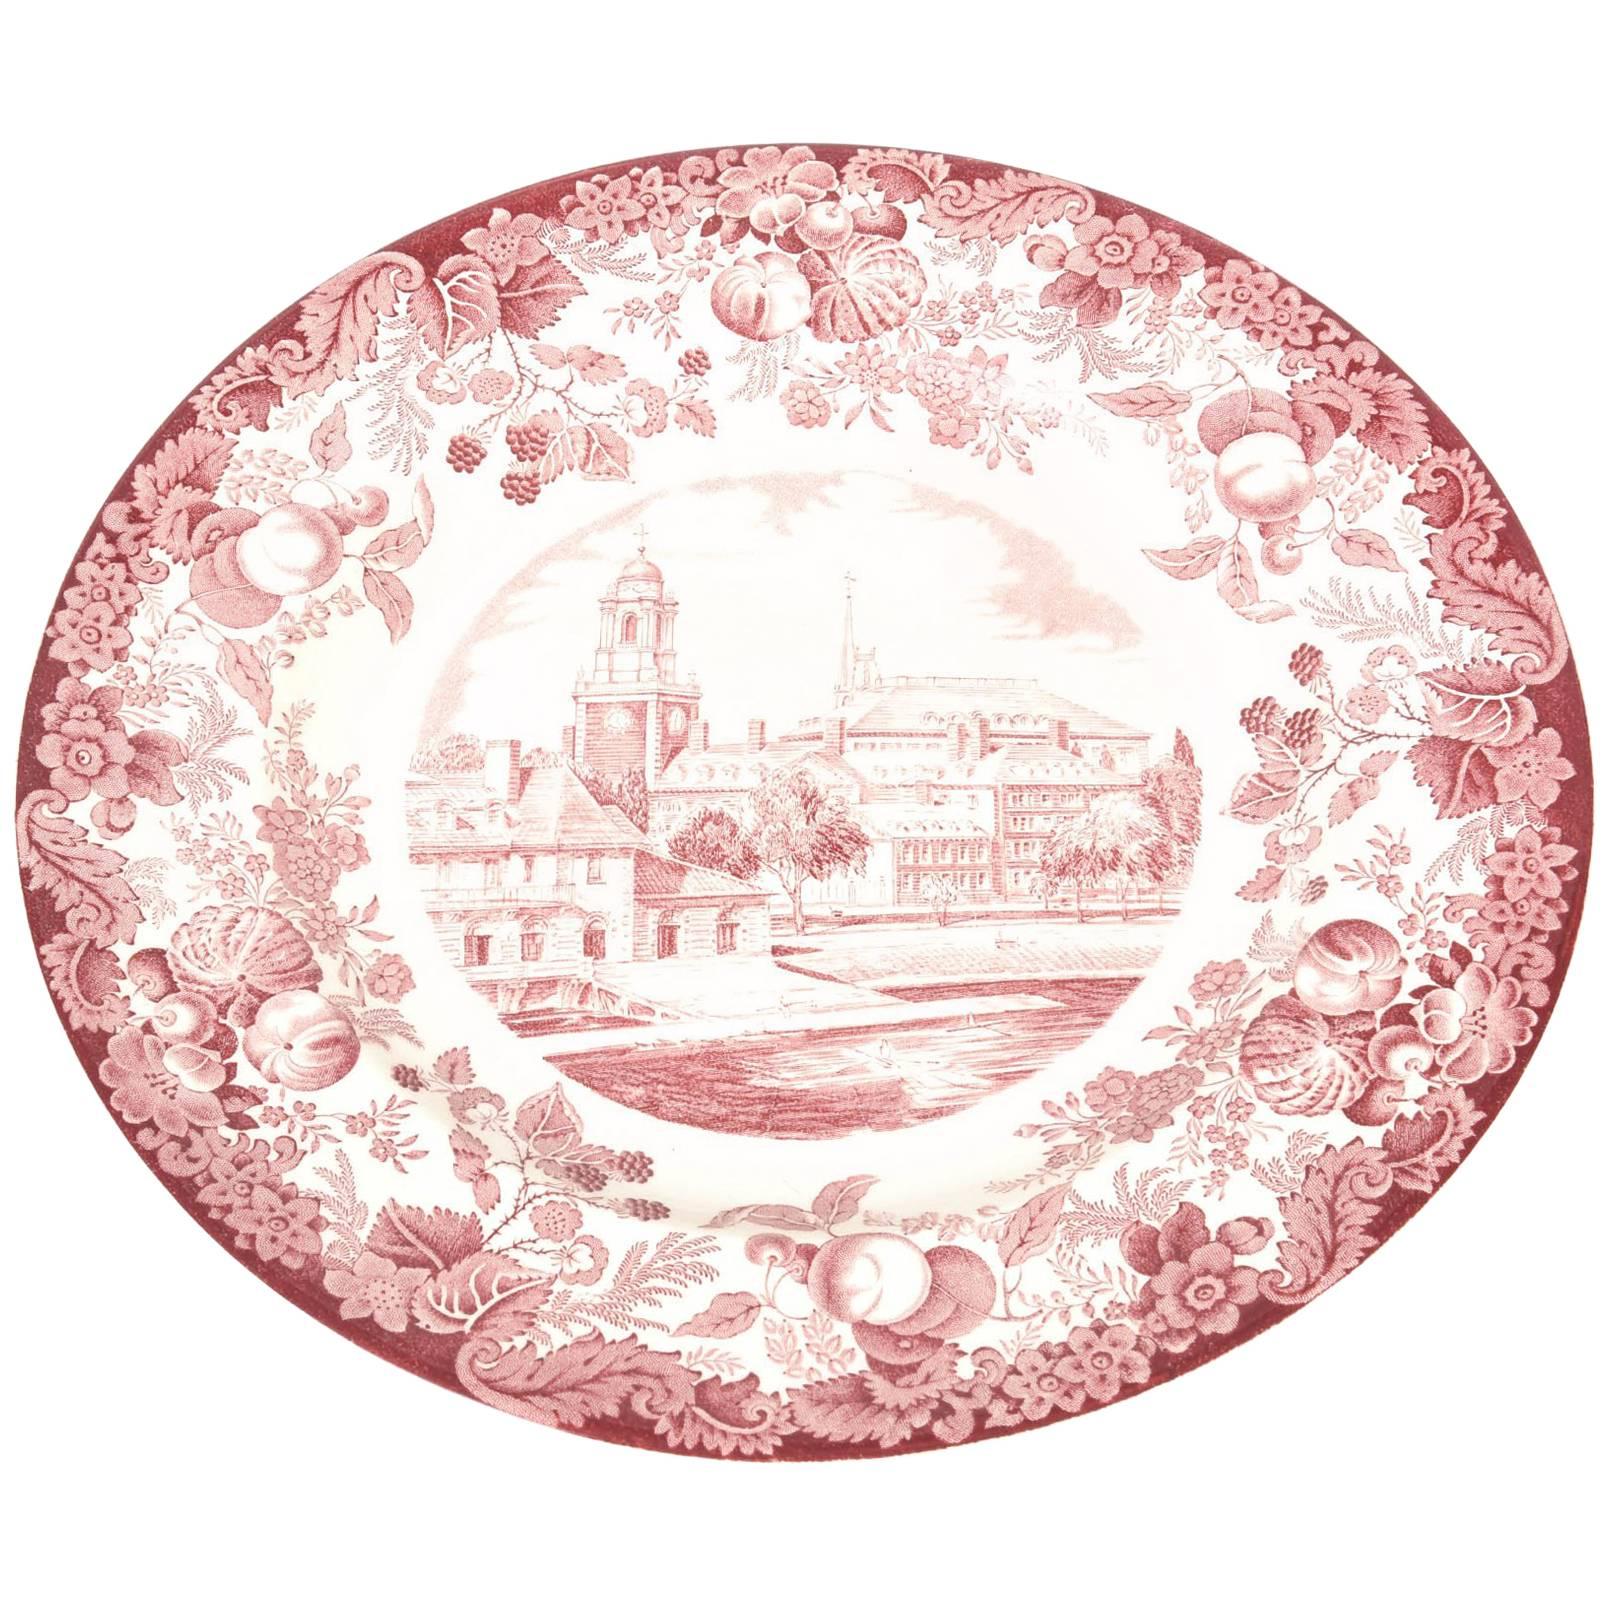 Harvard University Dinner Plate by Wedgwood, England